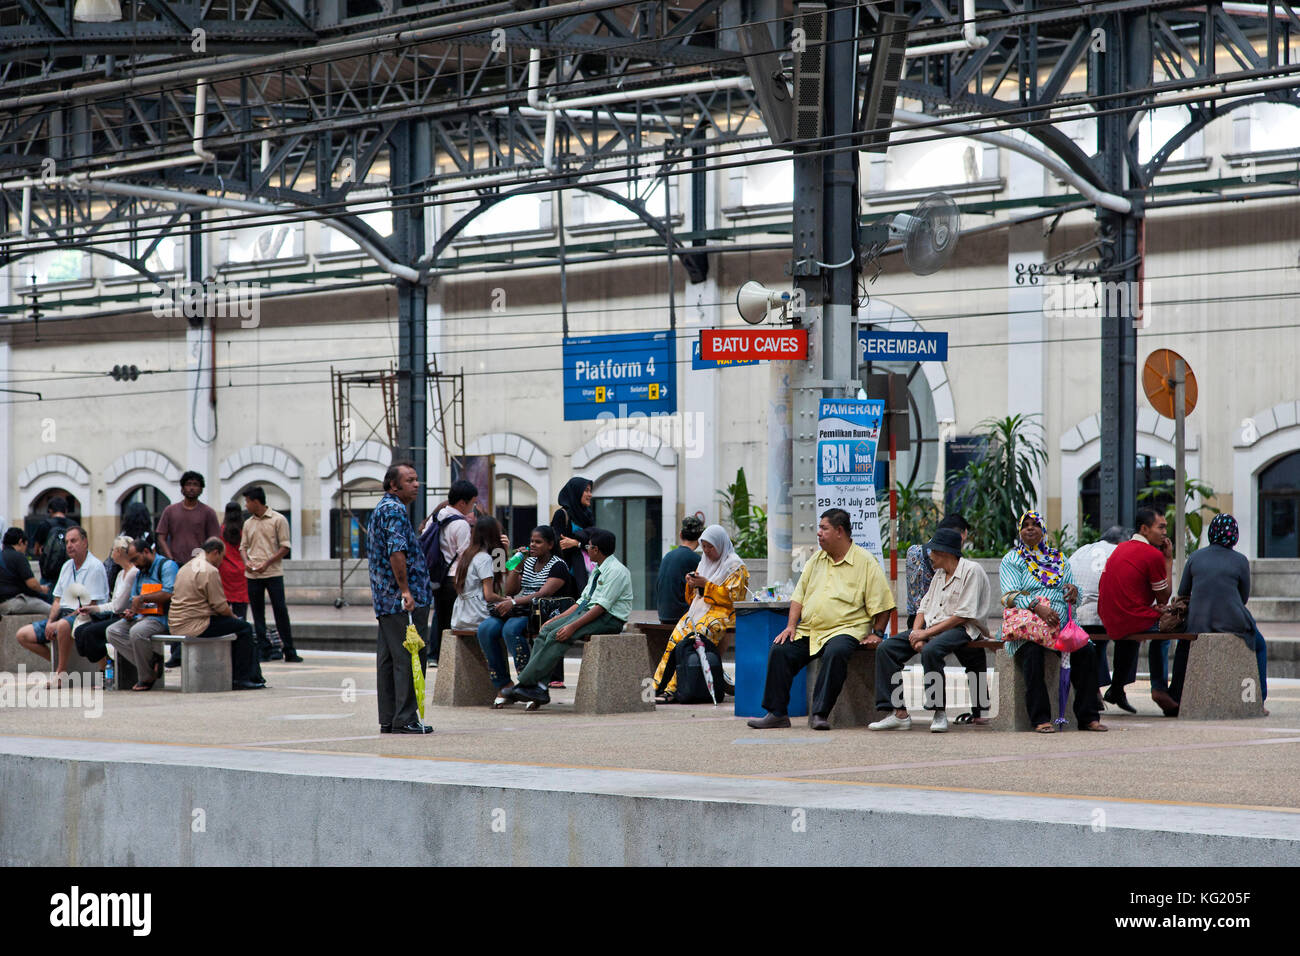 Kuala Lumpur, Malaysia :  historischer, kolonialer, alter ehemaliger Hauptbahnhof - wartende Reisende auf dem Bahnsteig Stock Photo